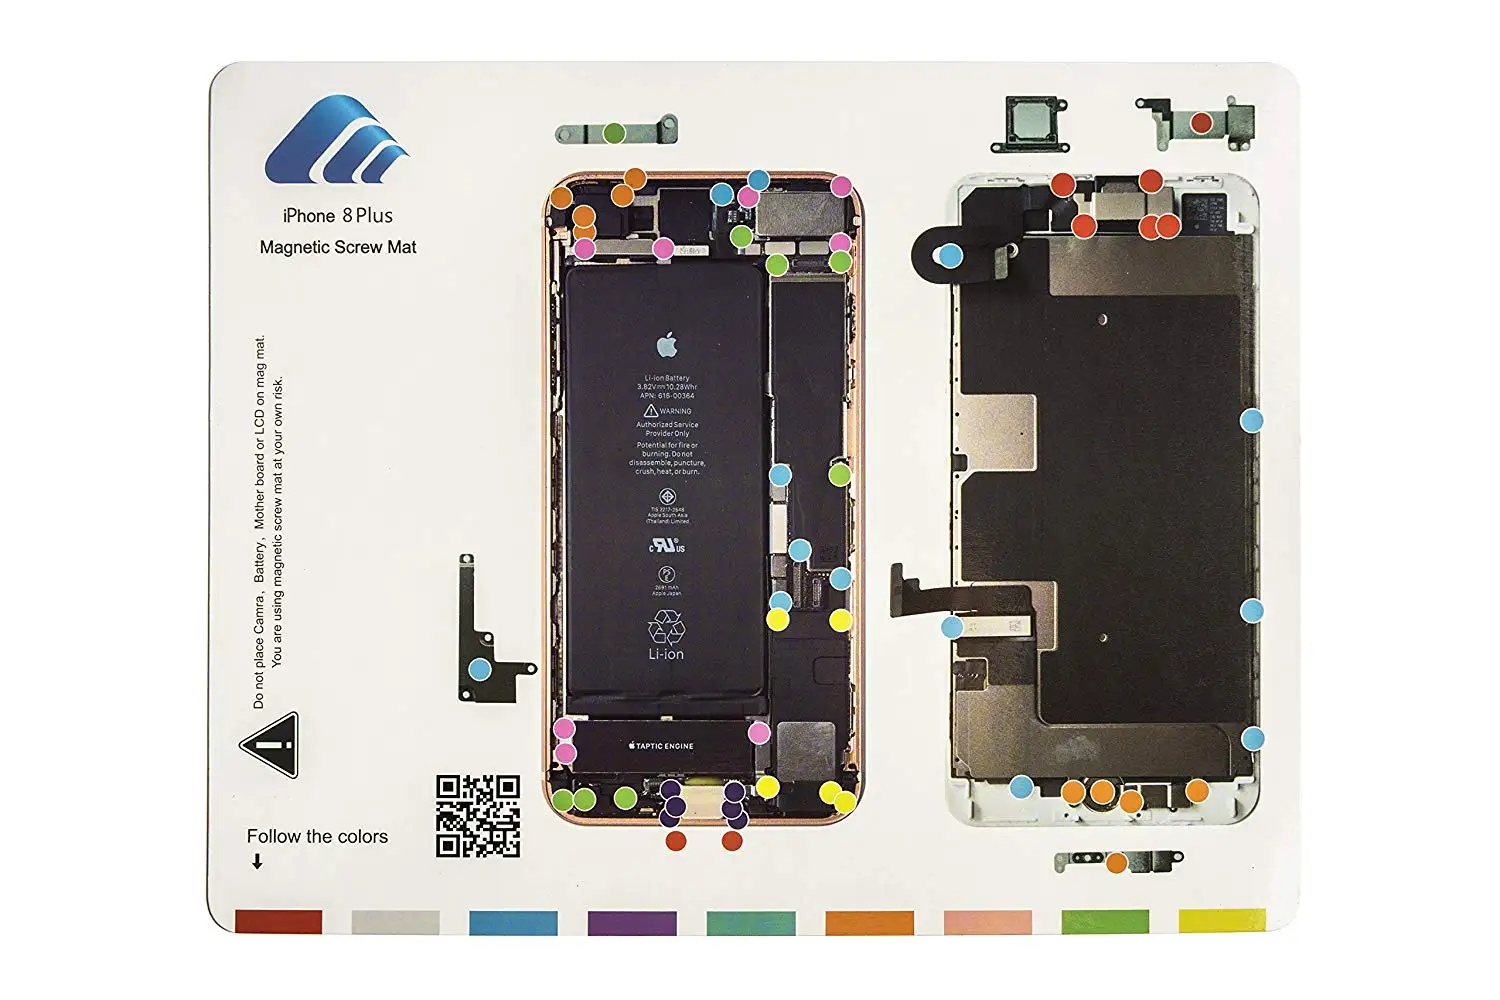 Iphone 6 Screw Chart Printable